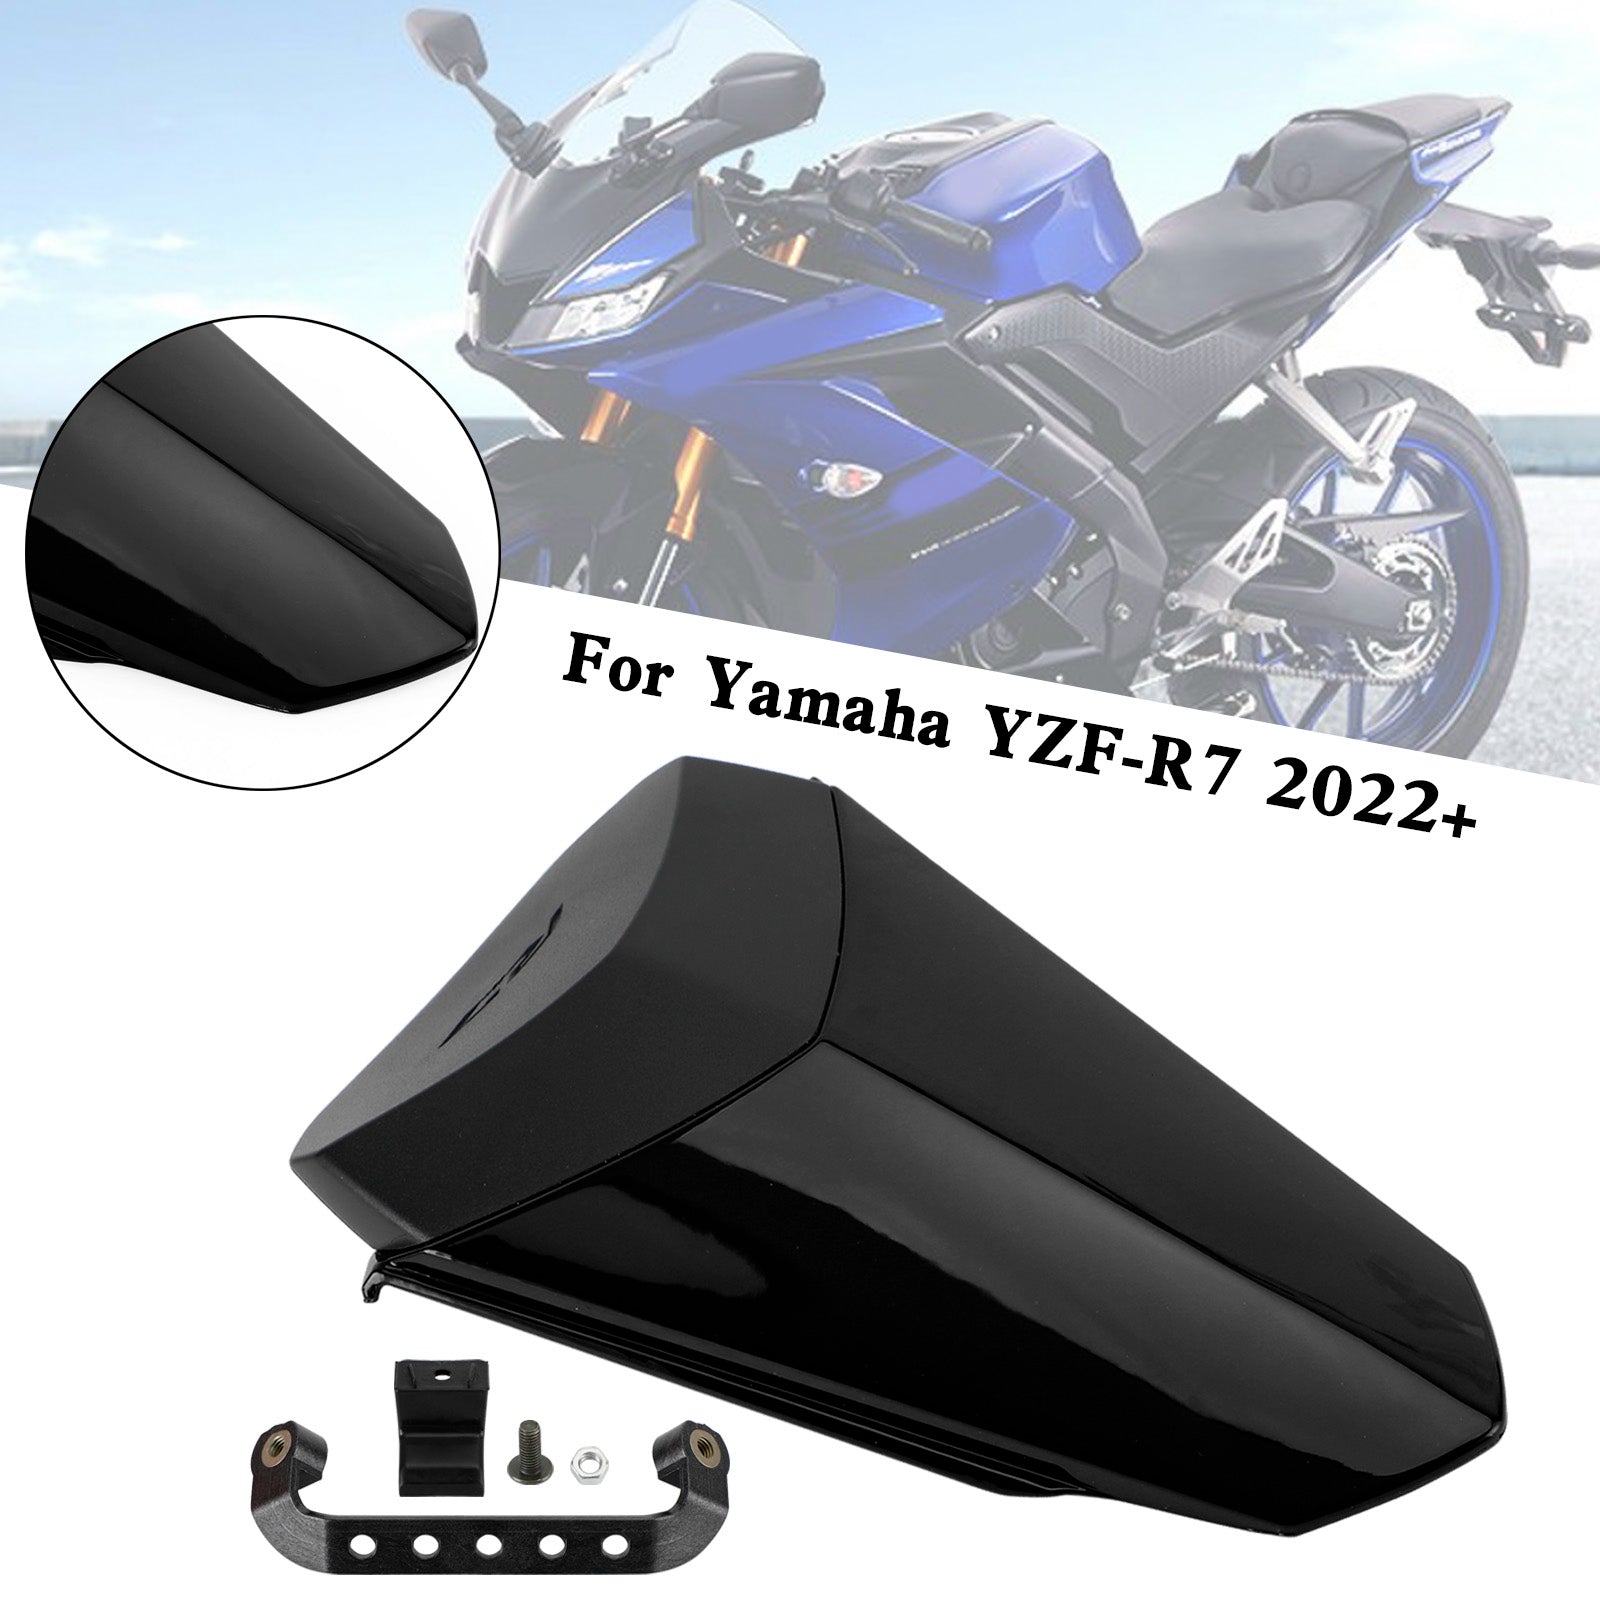 2022+ YAMAHA YZF-R7 YZF R7 Tail Rear Seat Cover Fairing Cowl